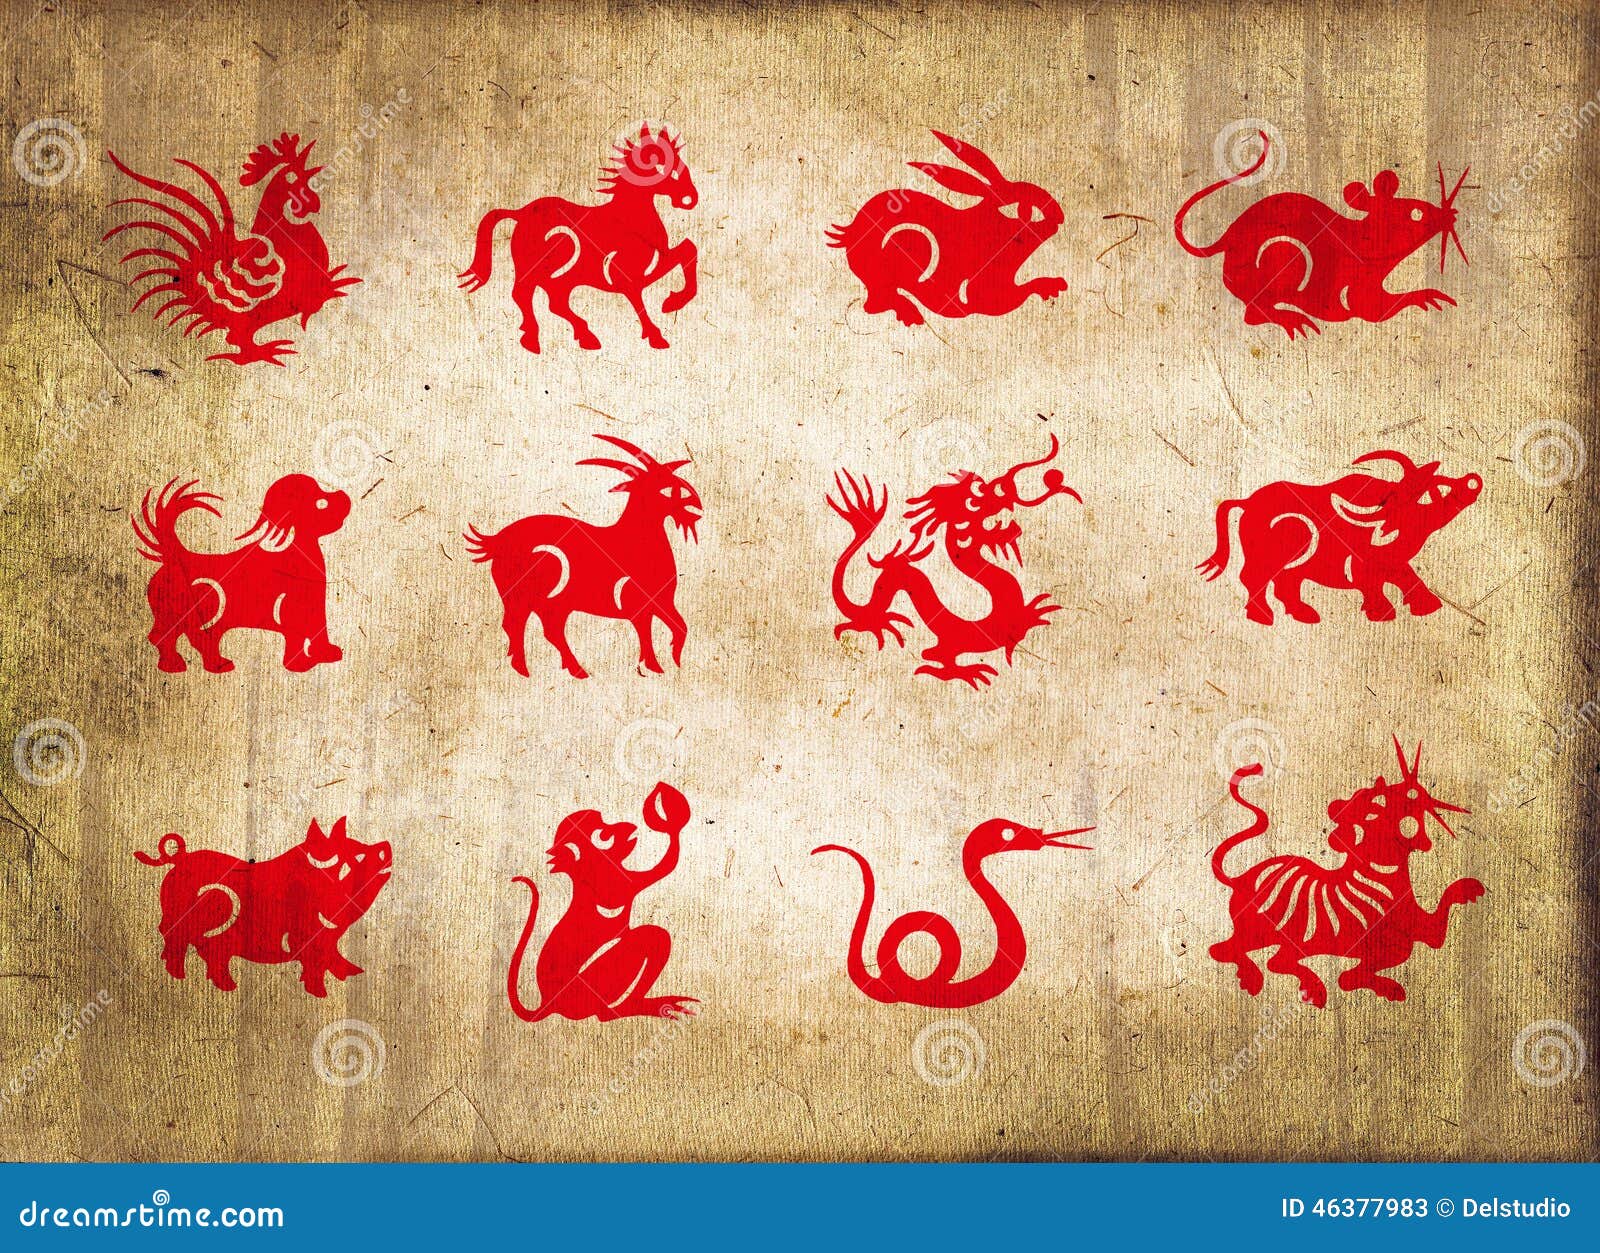 Animal Of The Chinese Zodiac, Sepia Textured Background Stock Photo - Image: 463779831300 x 1035